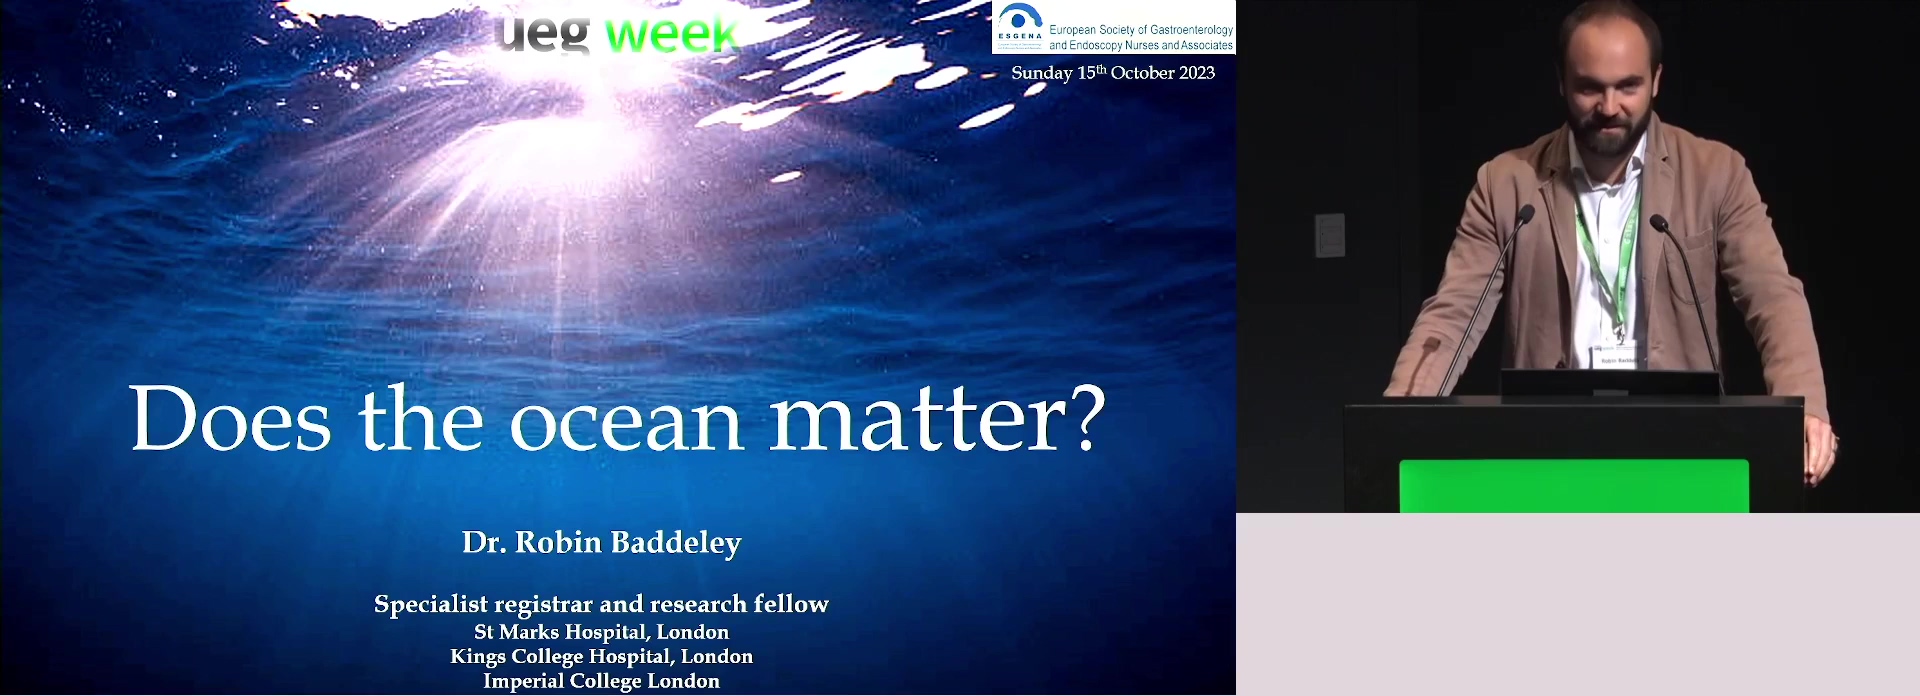 Does the ocean matter?